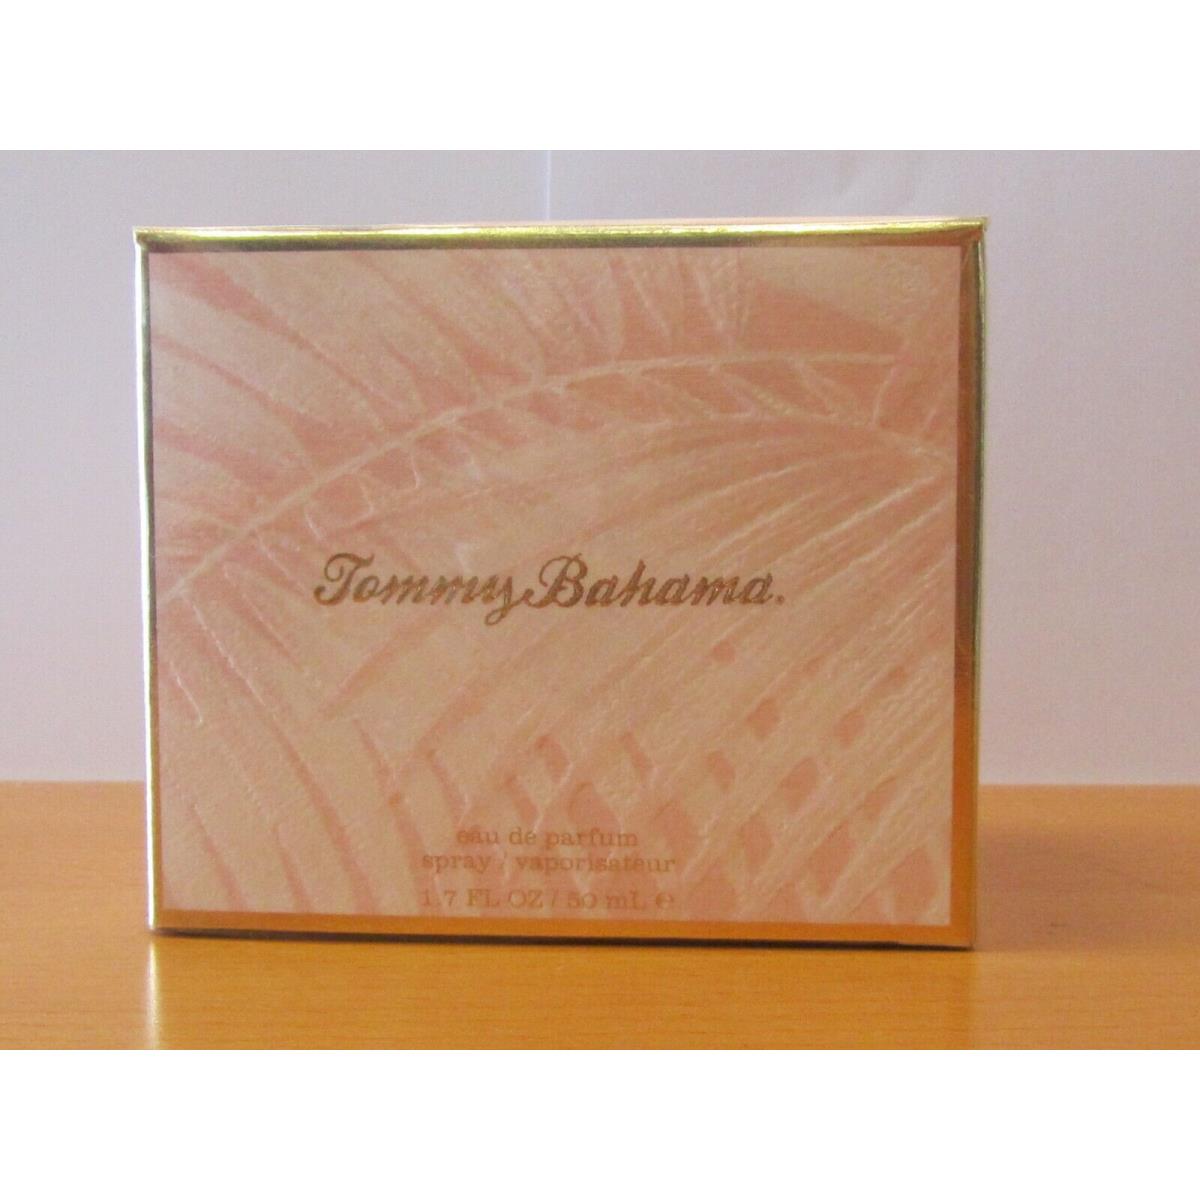 Tommy Bahama Perfume Women 3.4 oz Eau de Parfum Spray Old Formula